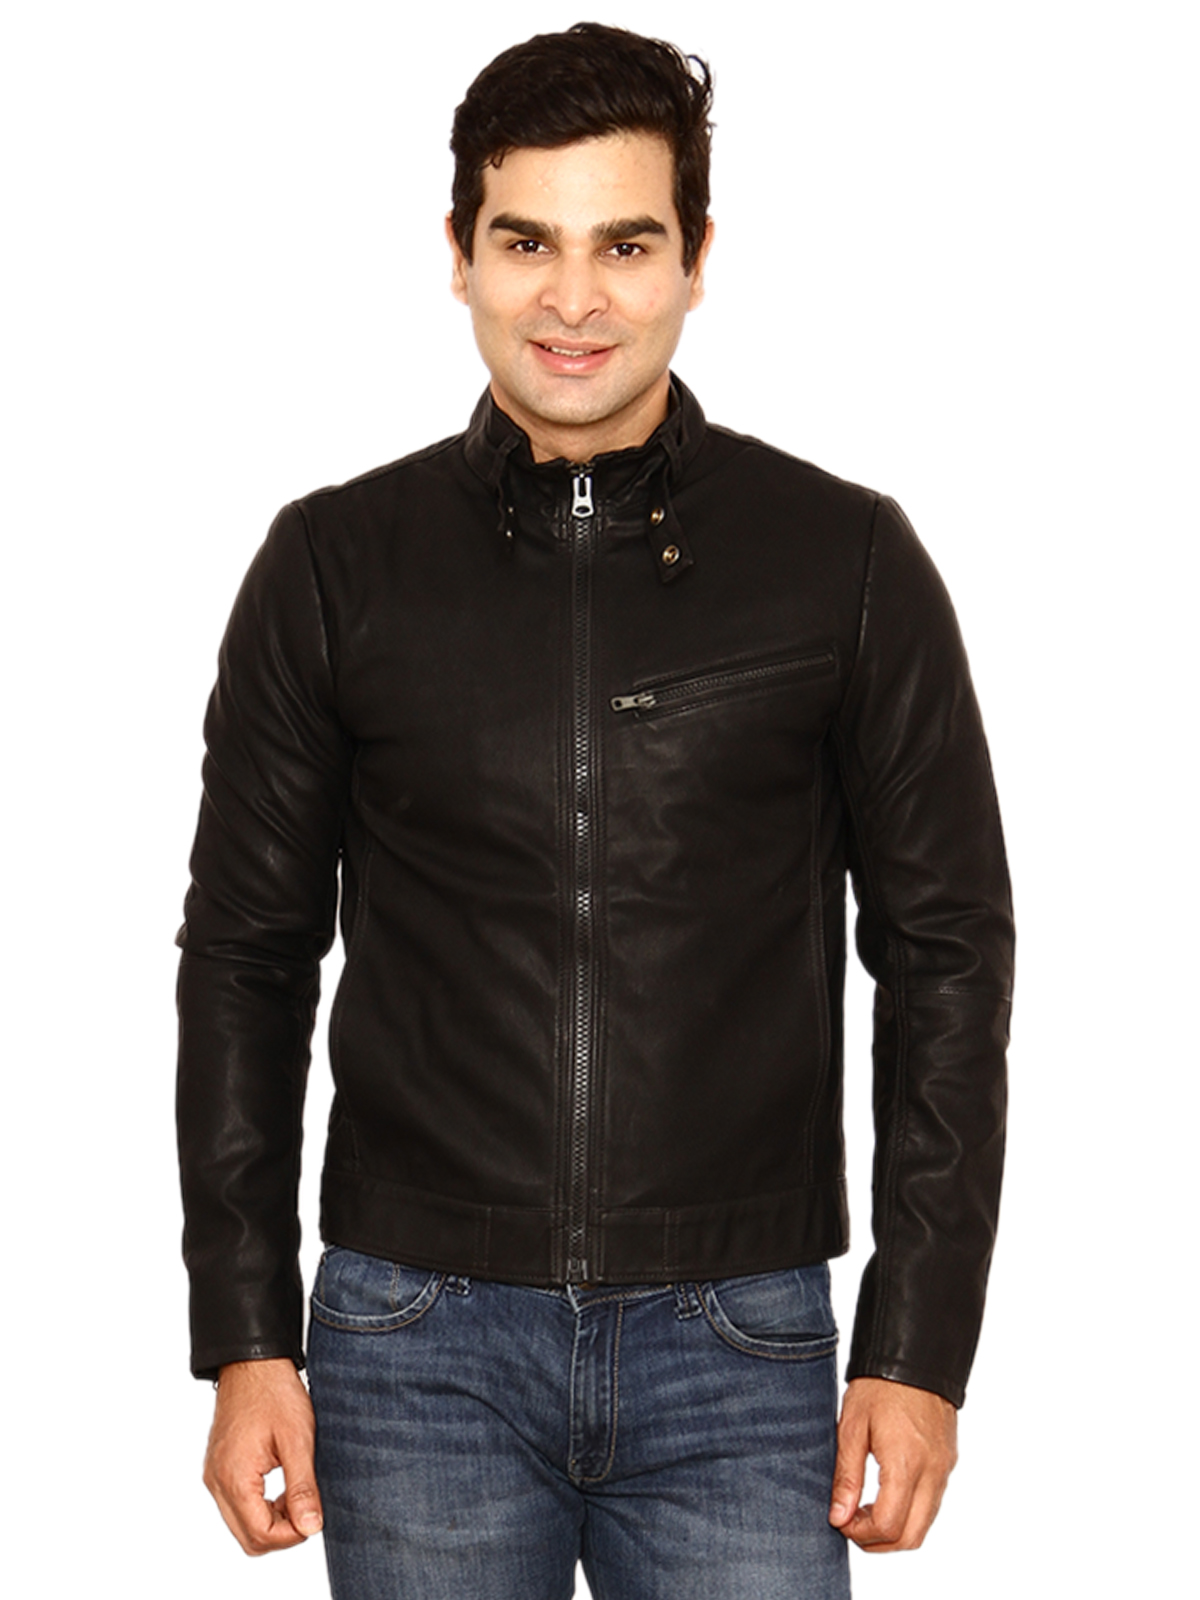 Buy Wrangler Black Faux Leather Biker Jacket Online @ ₹7995 from ShopClues